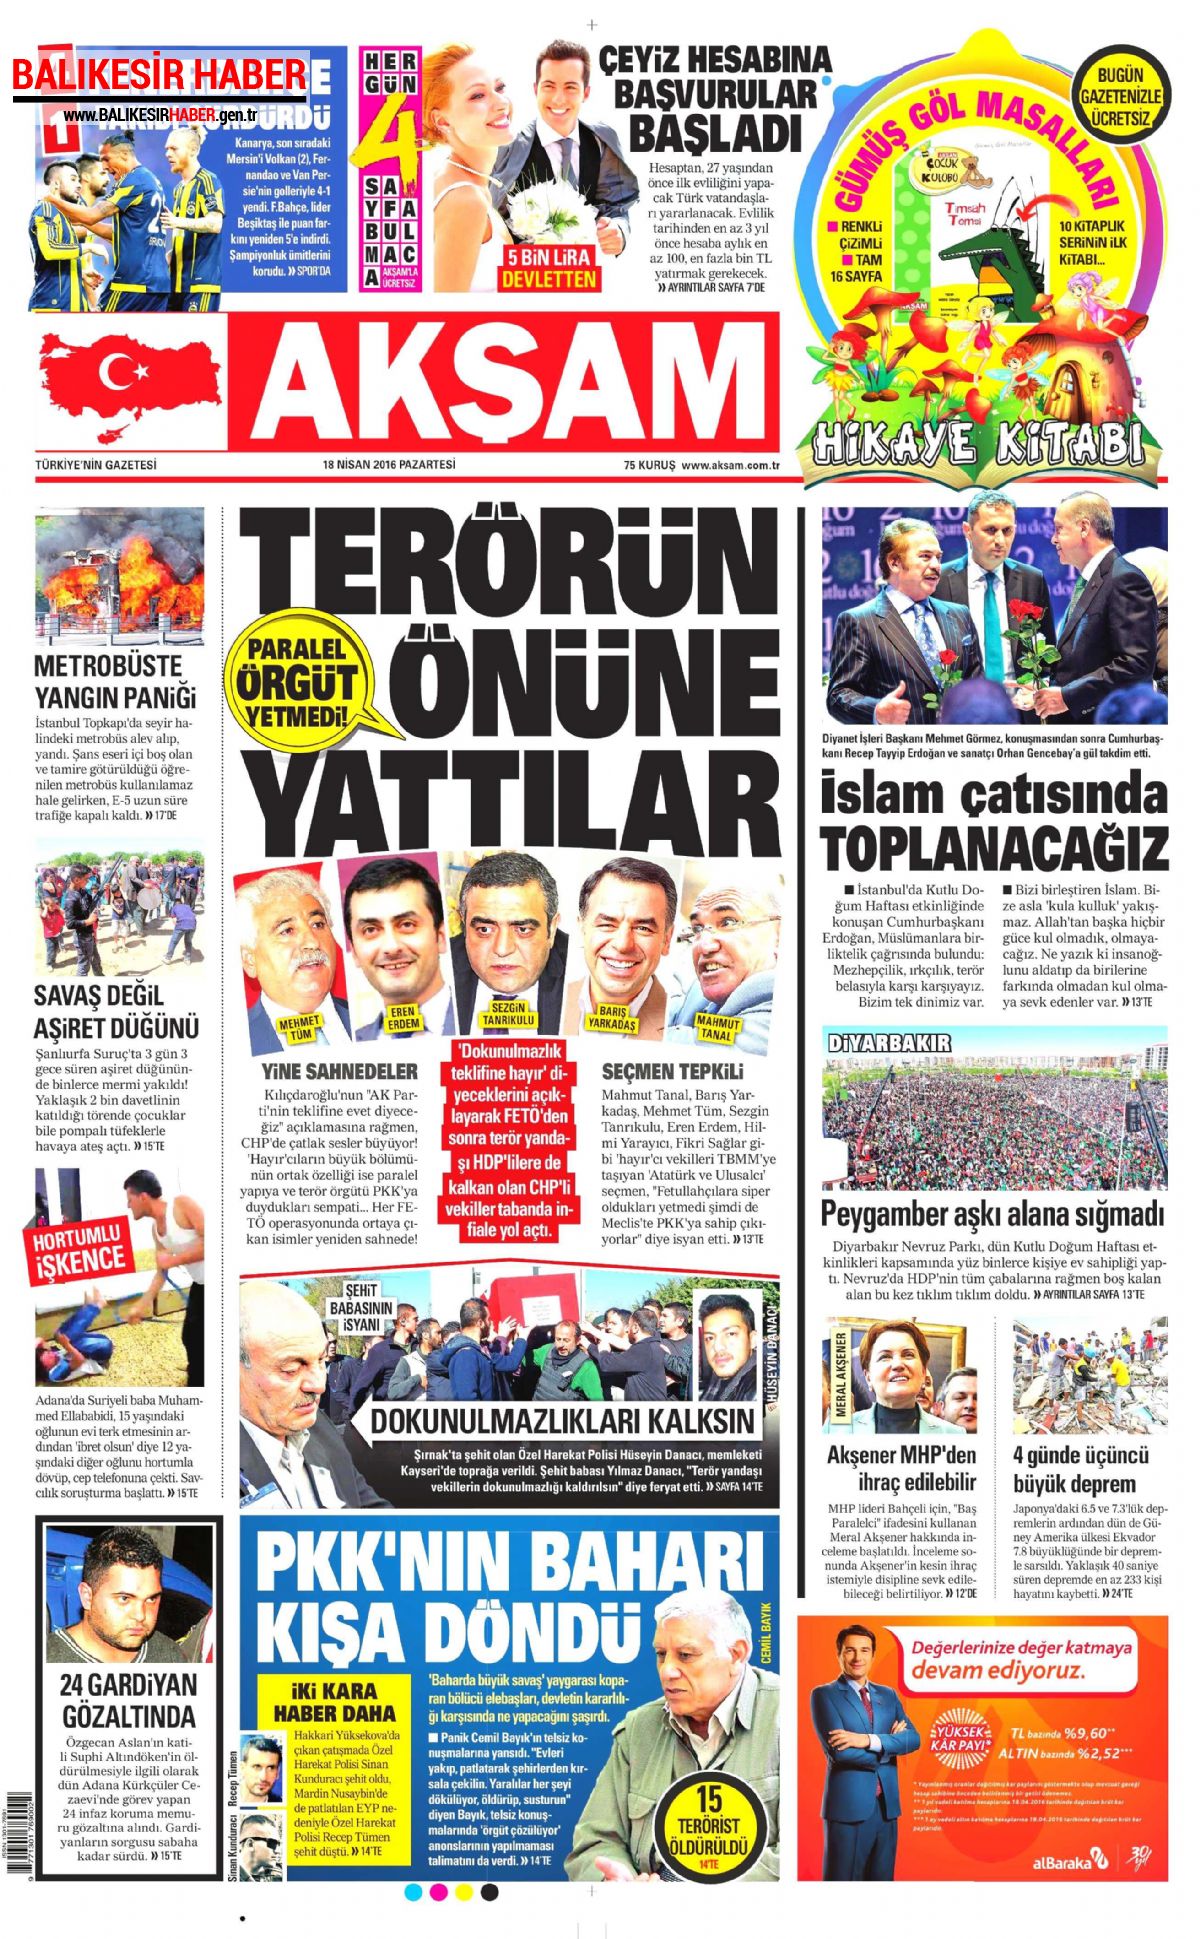 Akşam Gazetesi 18 Nisan 2016 Gazete Manşetleri